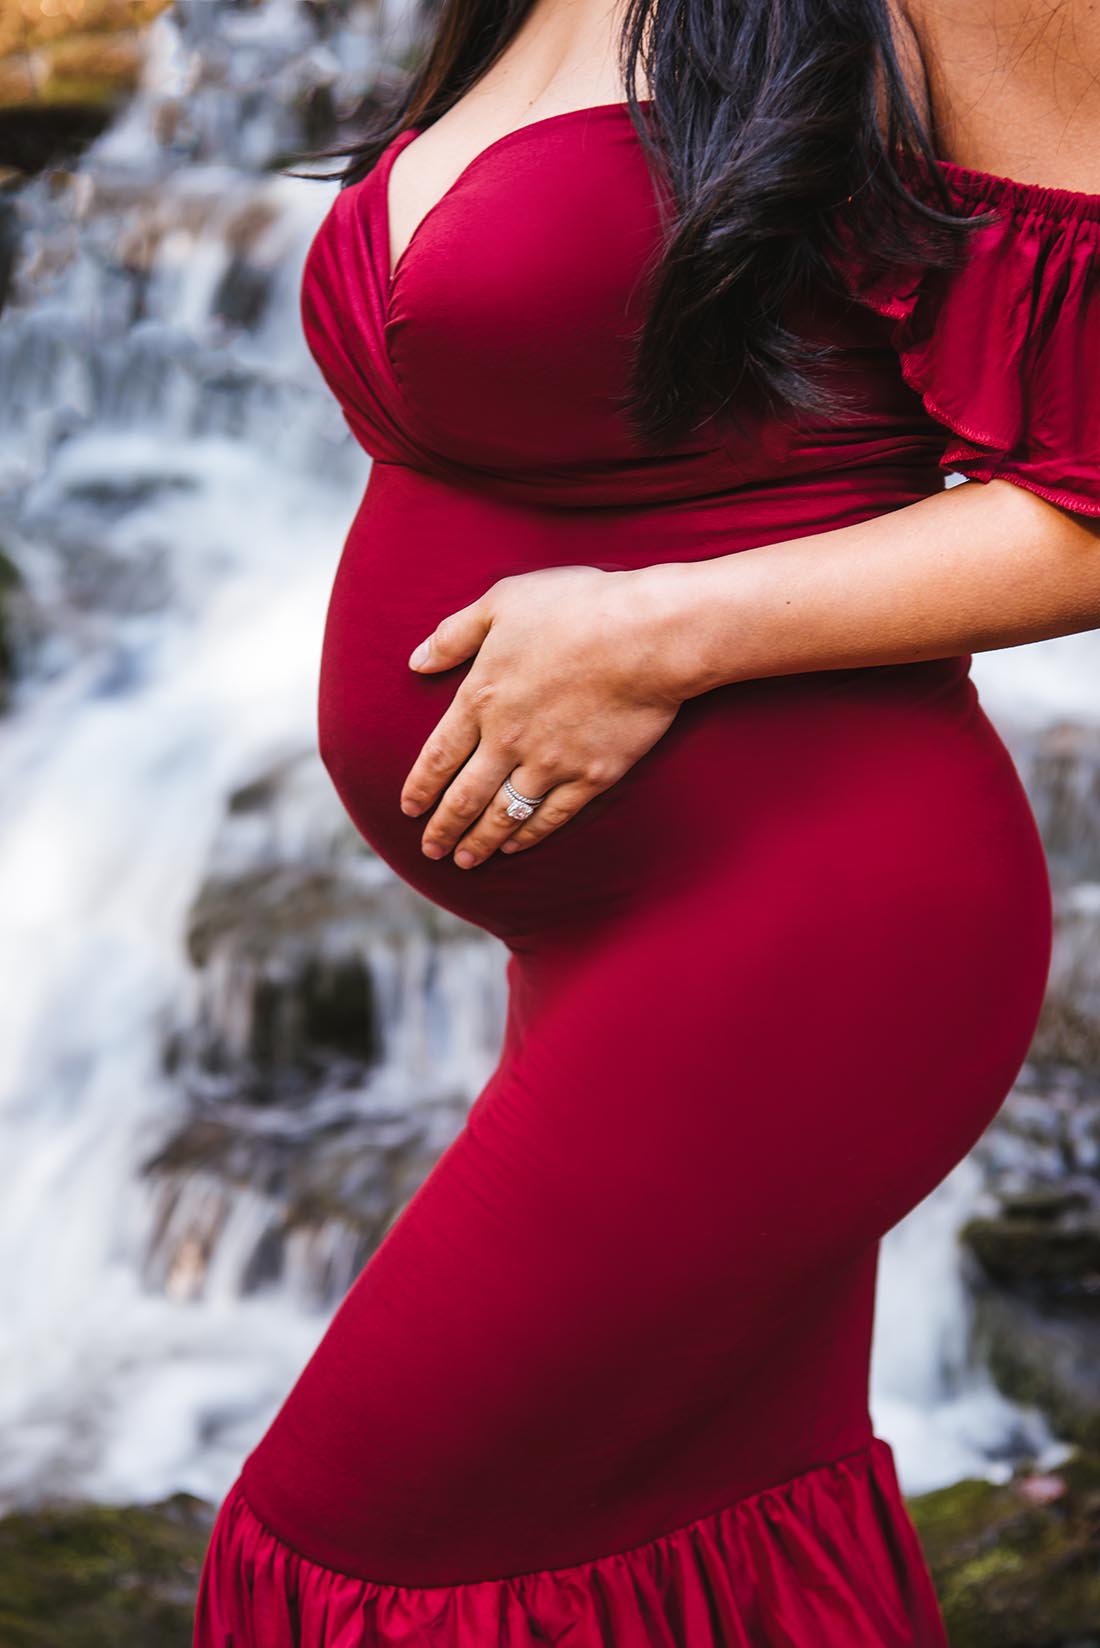 Poconos Waterfall Maternity Session